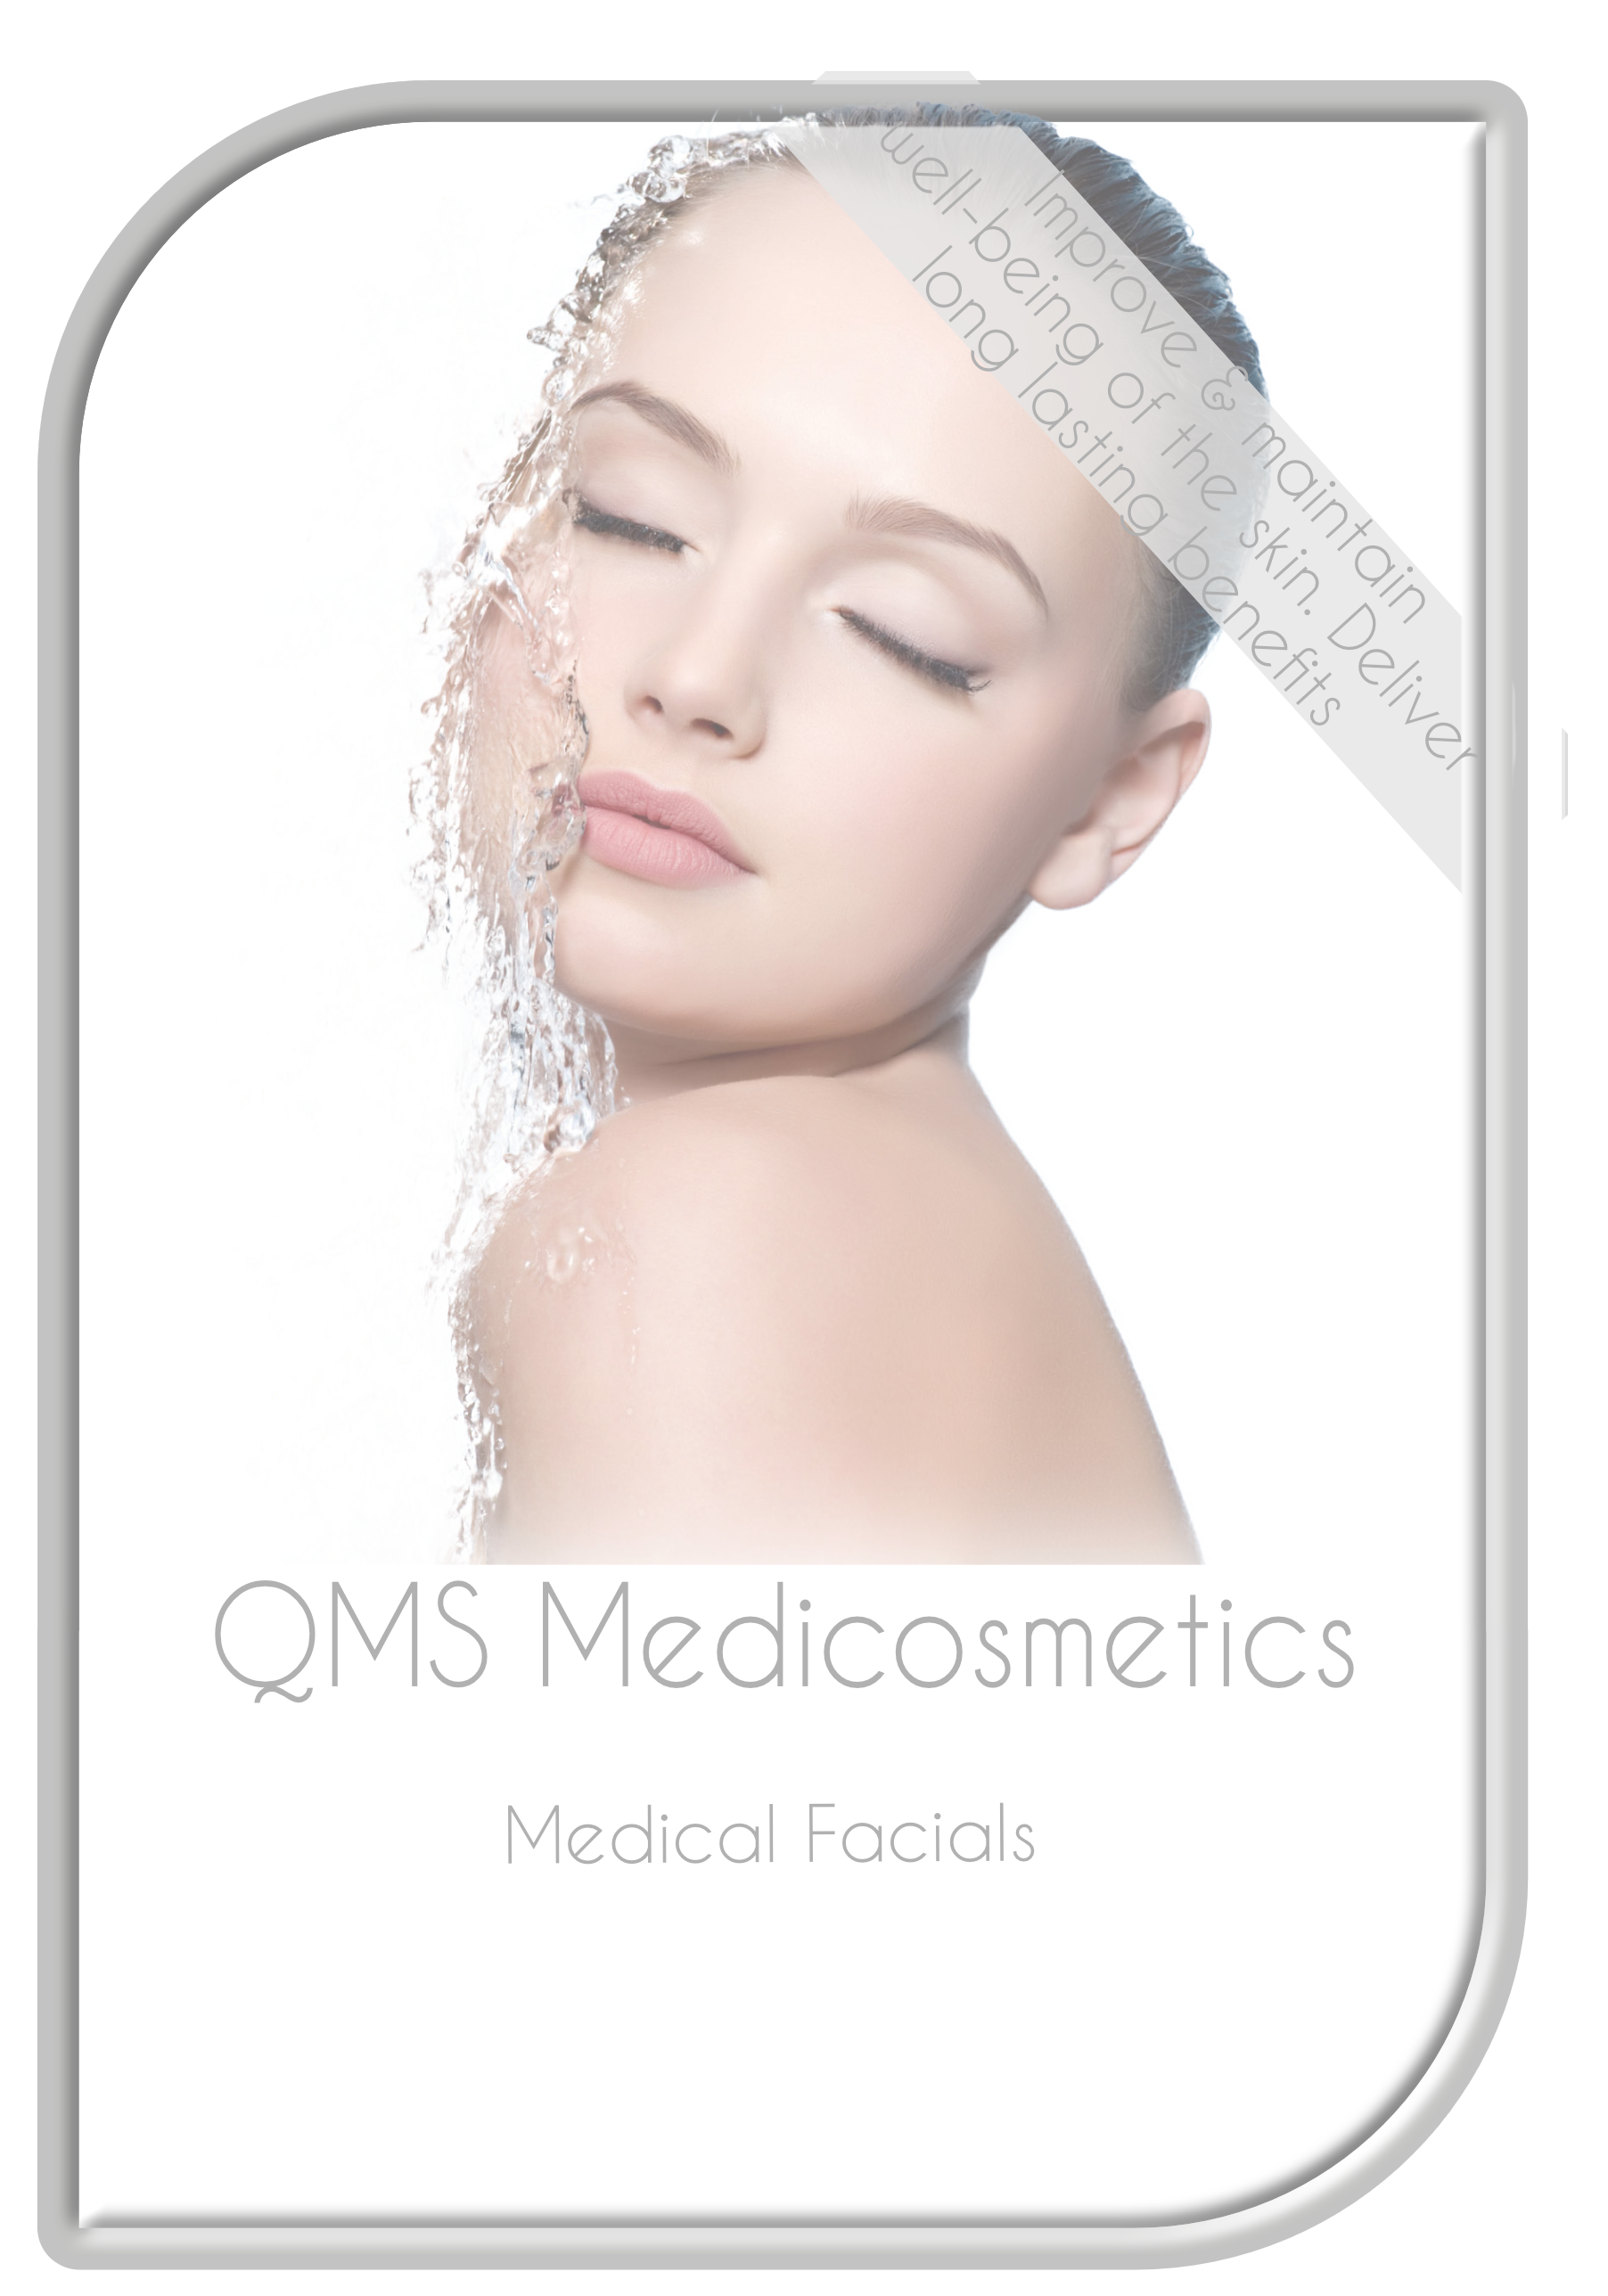 Facials by QMS Medicosmetics